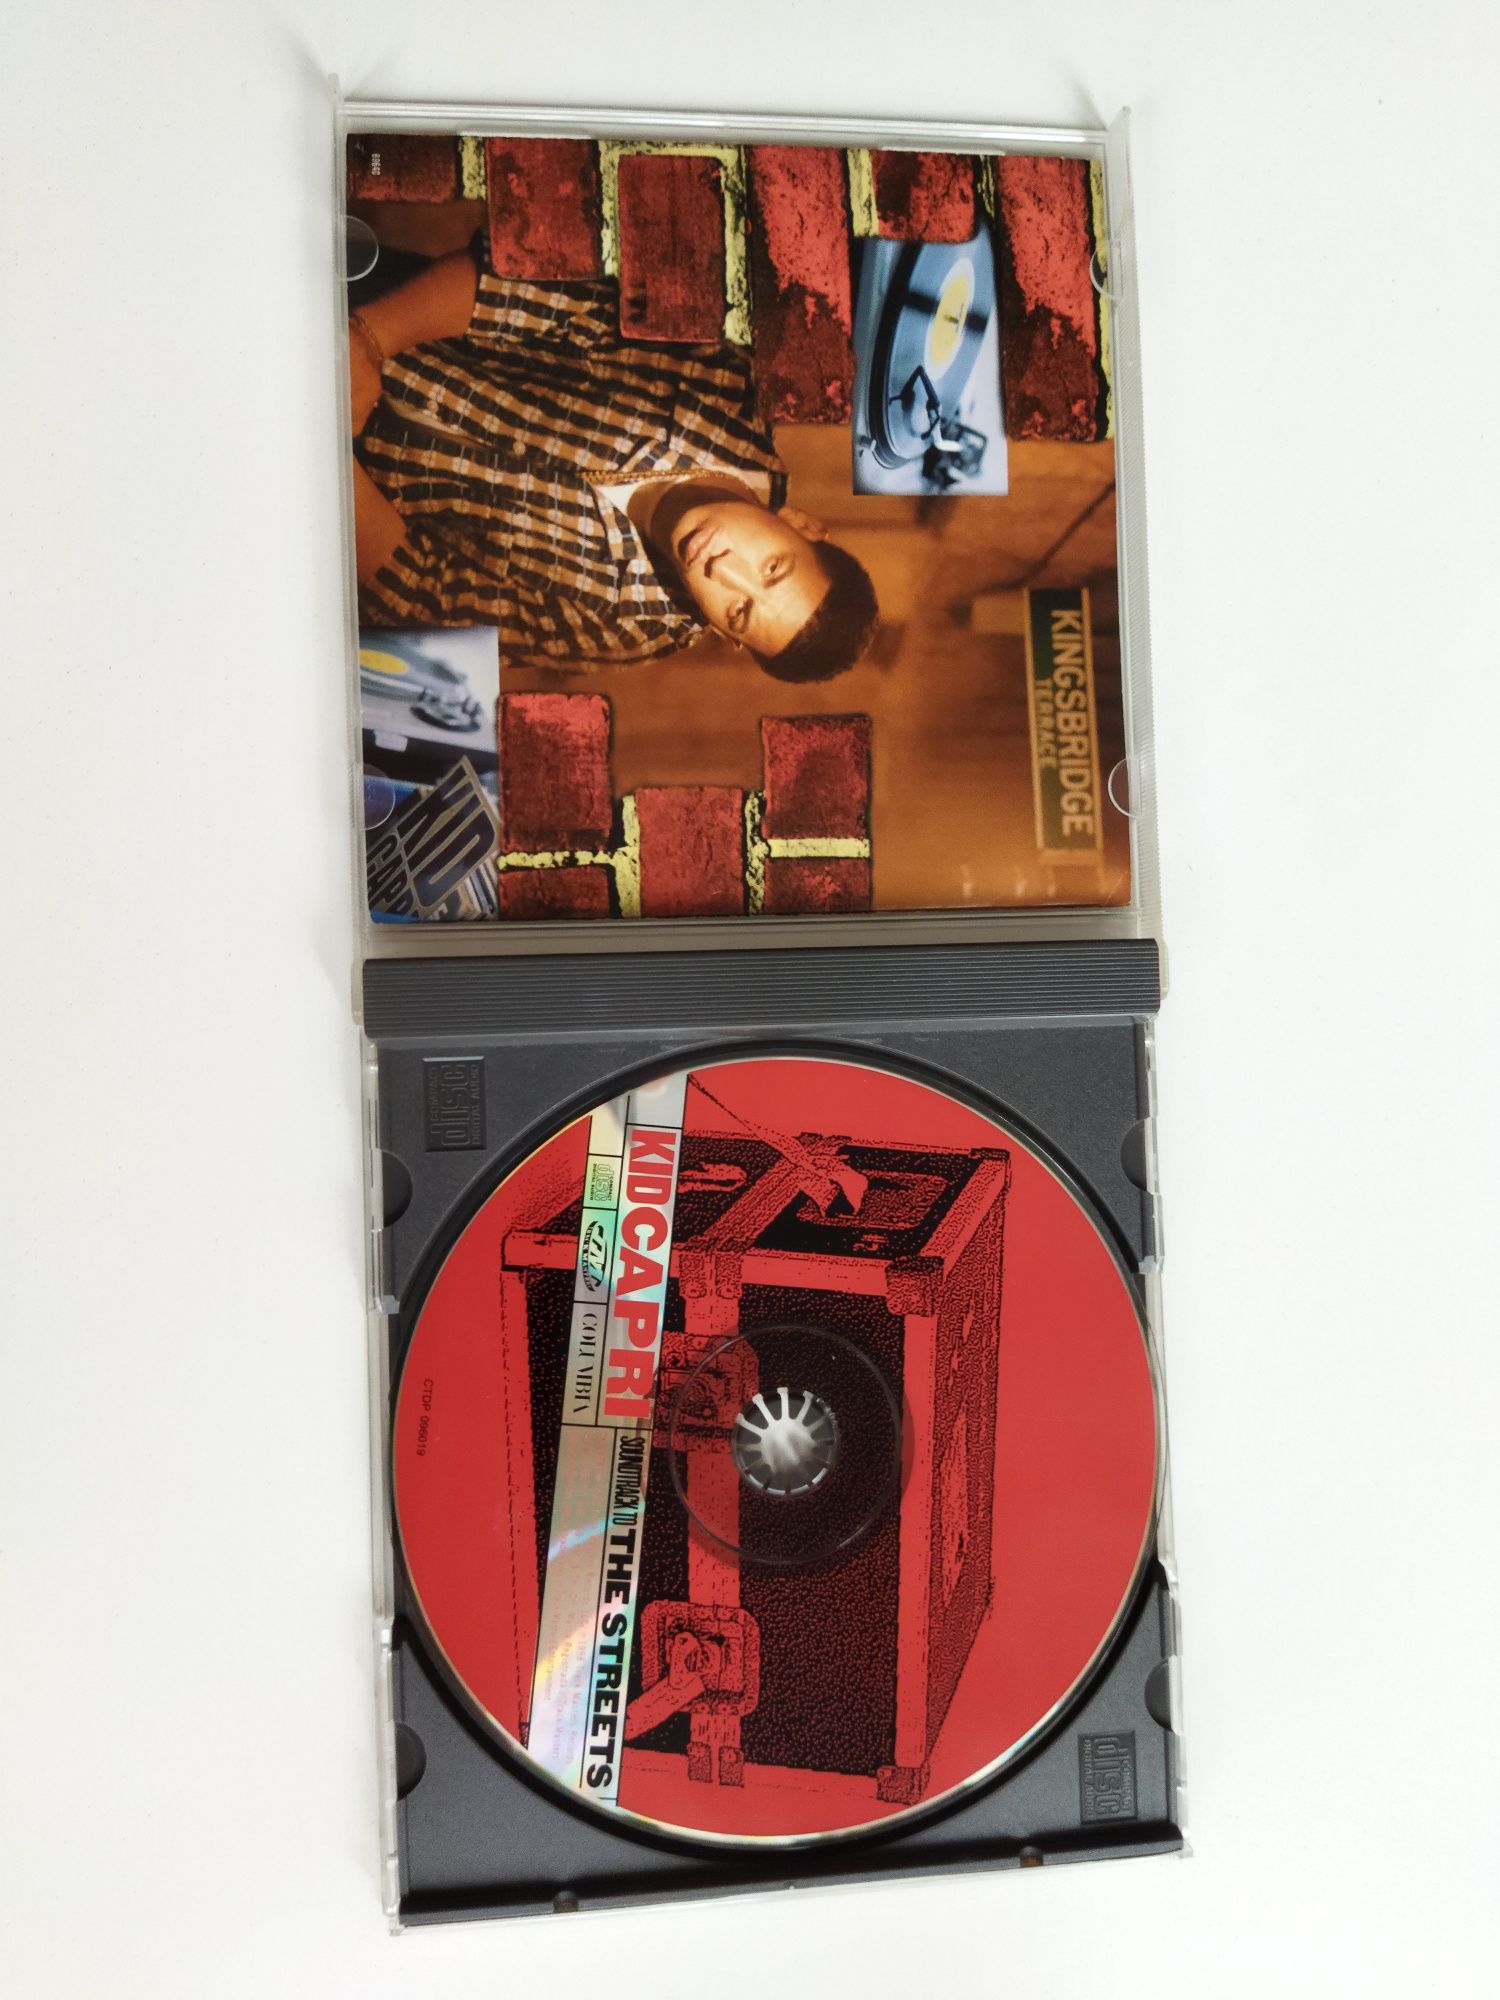 Kid Capri - Soundtrack To The Streets (CD) / 1st Press USA 1998